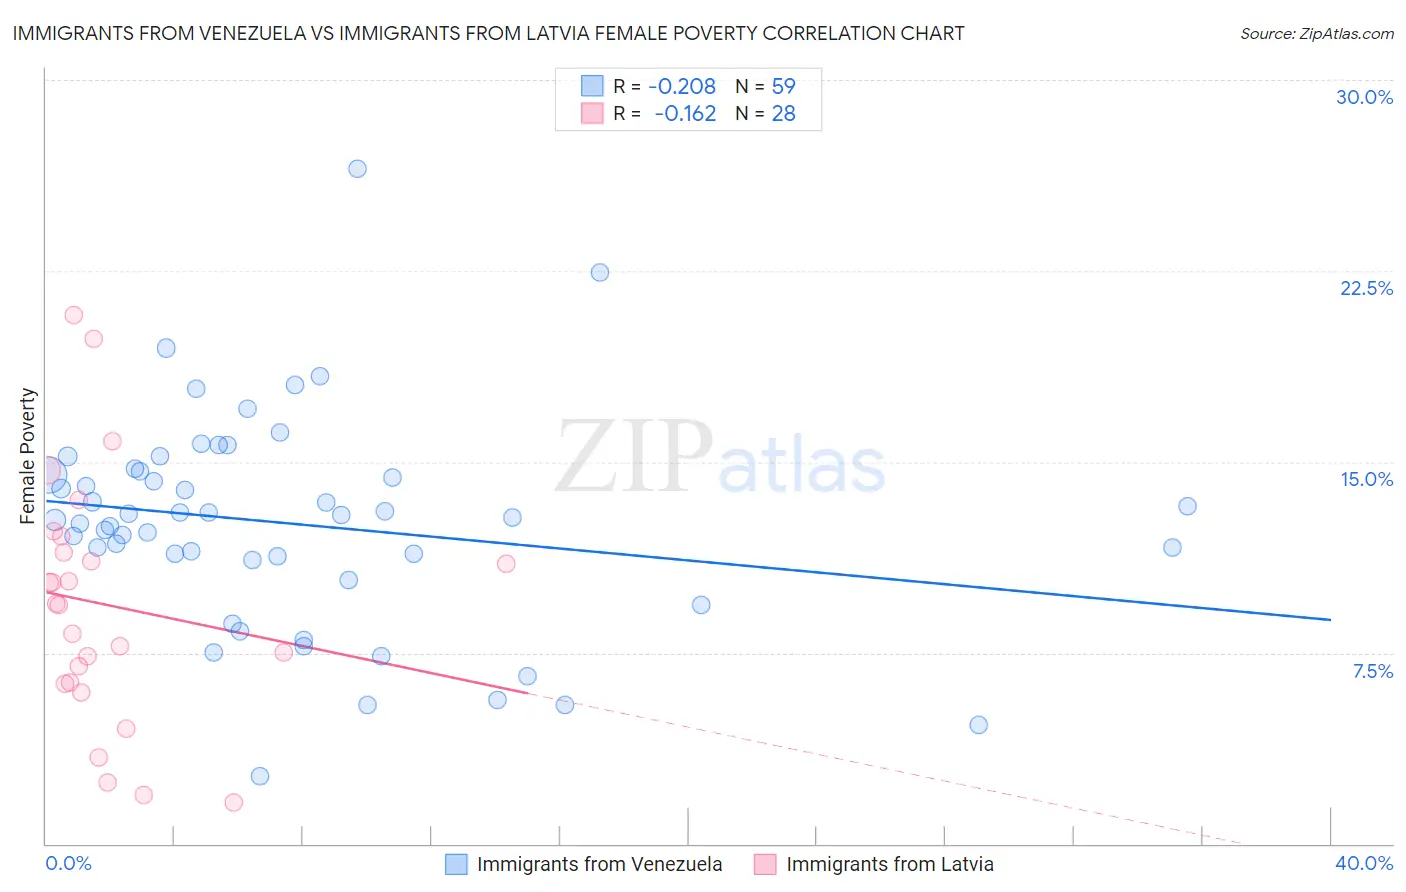 Immigrants from Venezuela vs Immigrants from Latvia Female Poverty